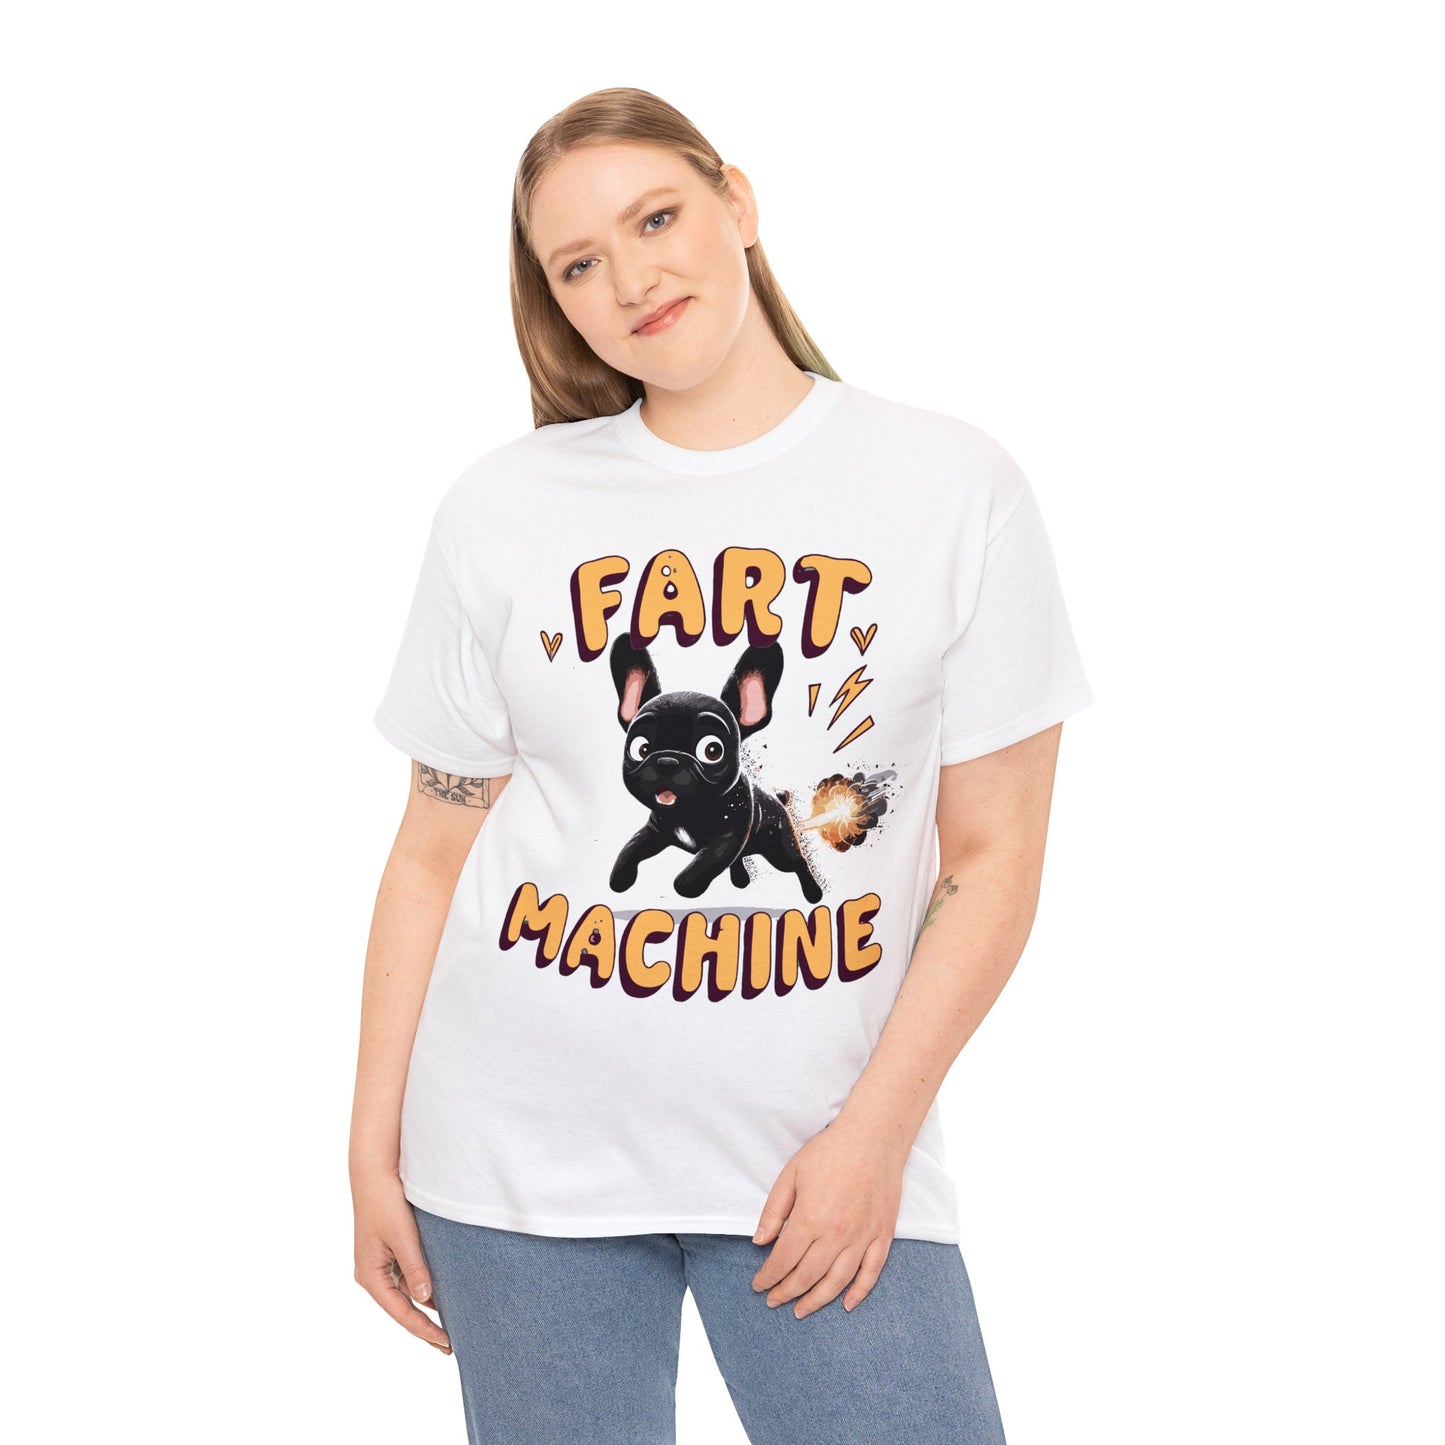 Fart Machine  - Unisex Tshirt